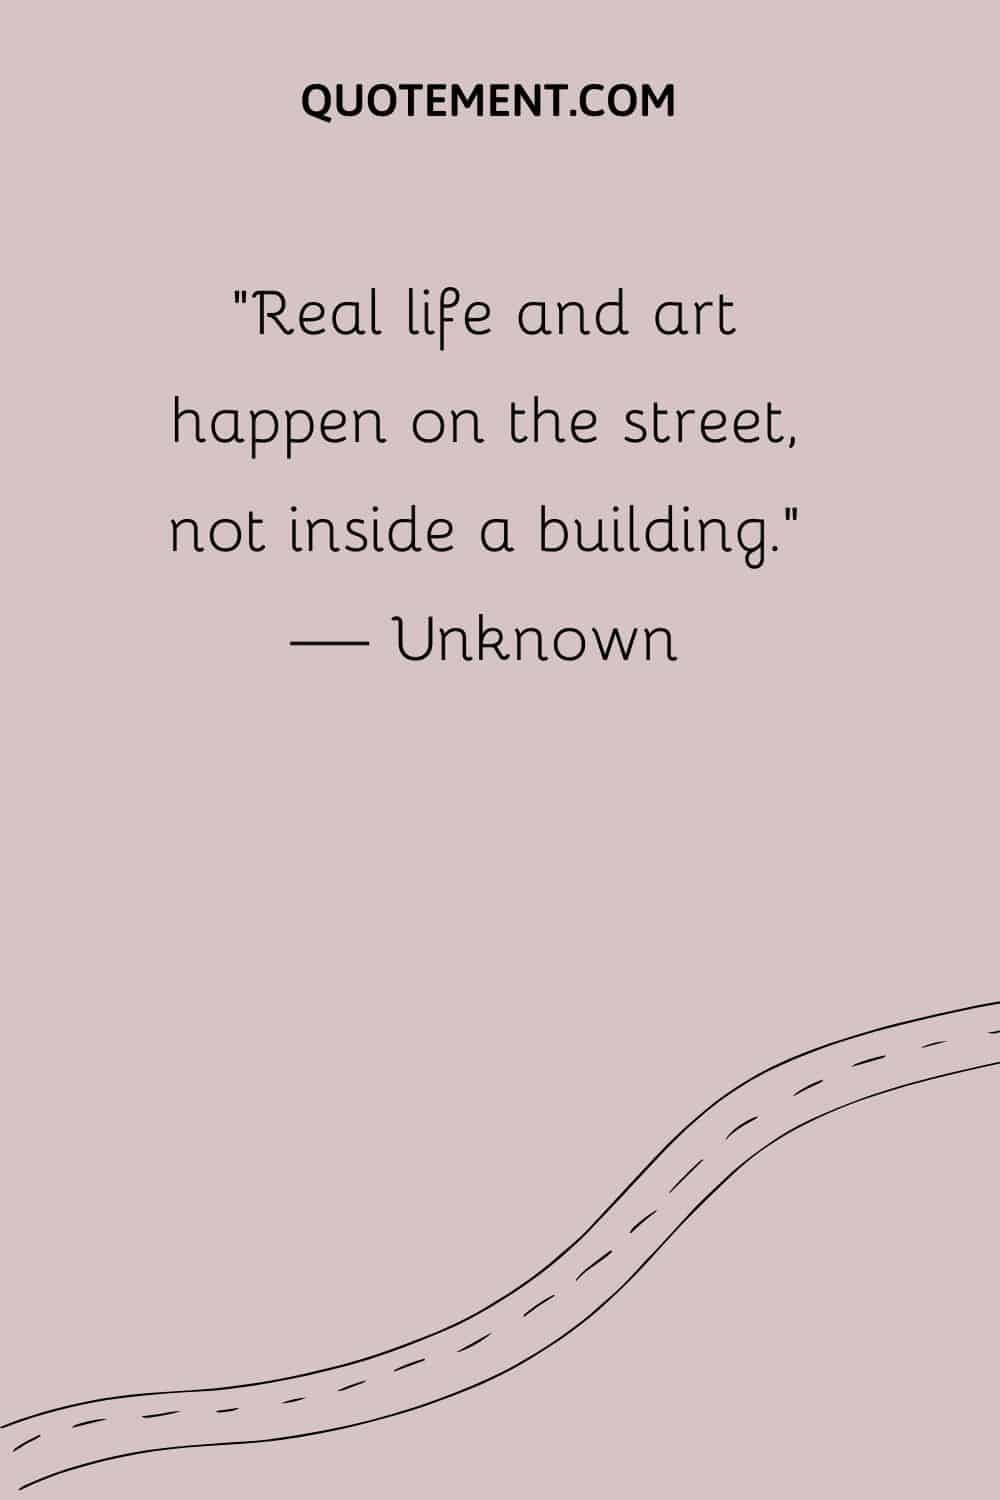 illustration of curvy street representing street life quote
